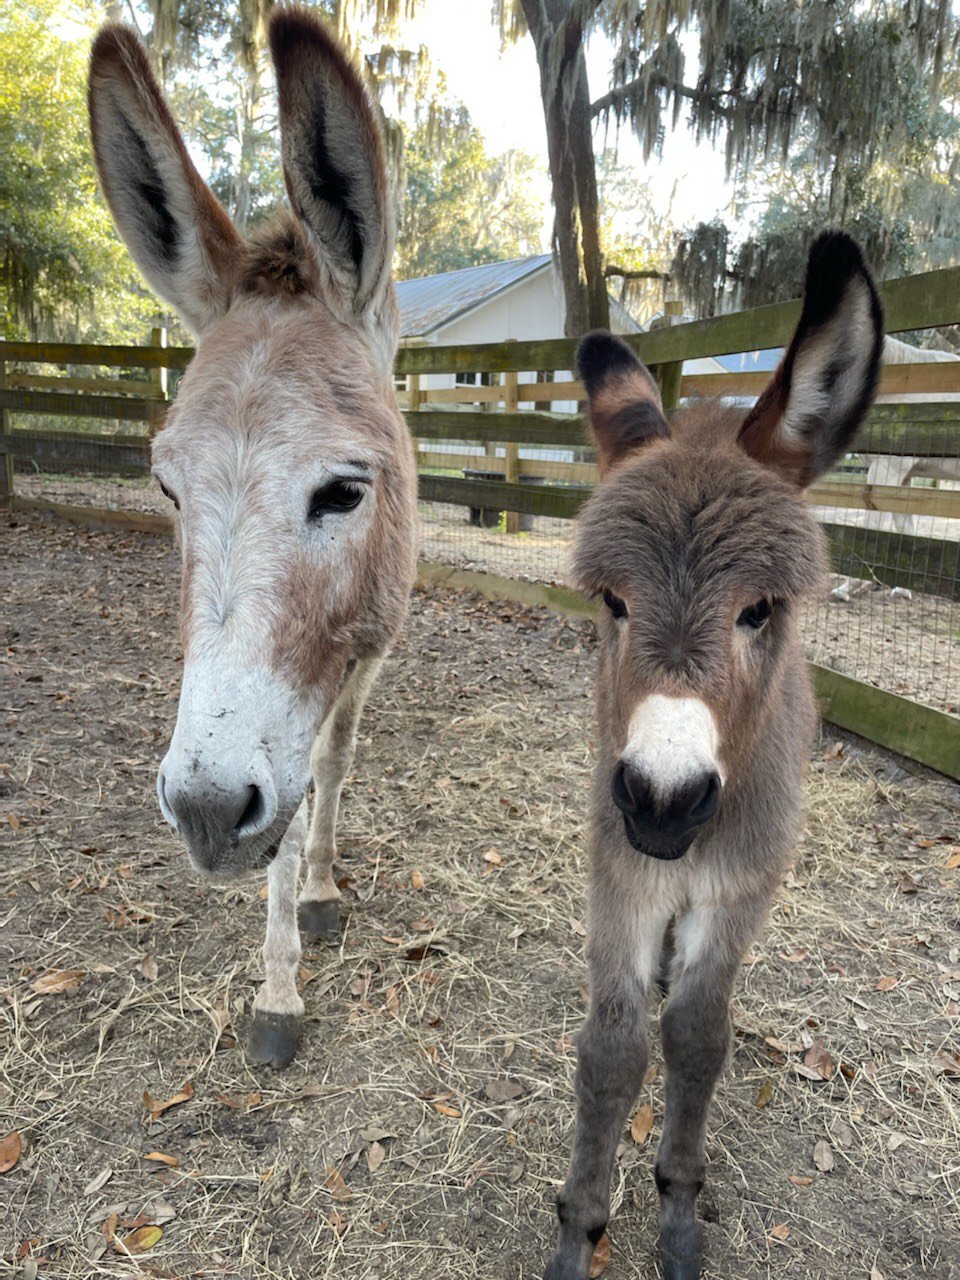 Mama and baby donkey at The Farm at Oatland